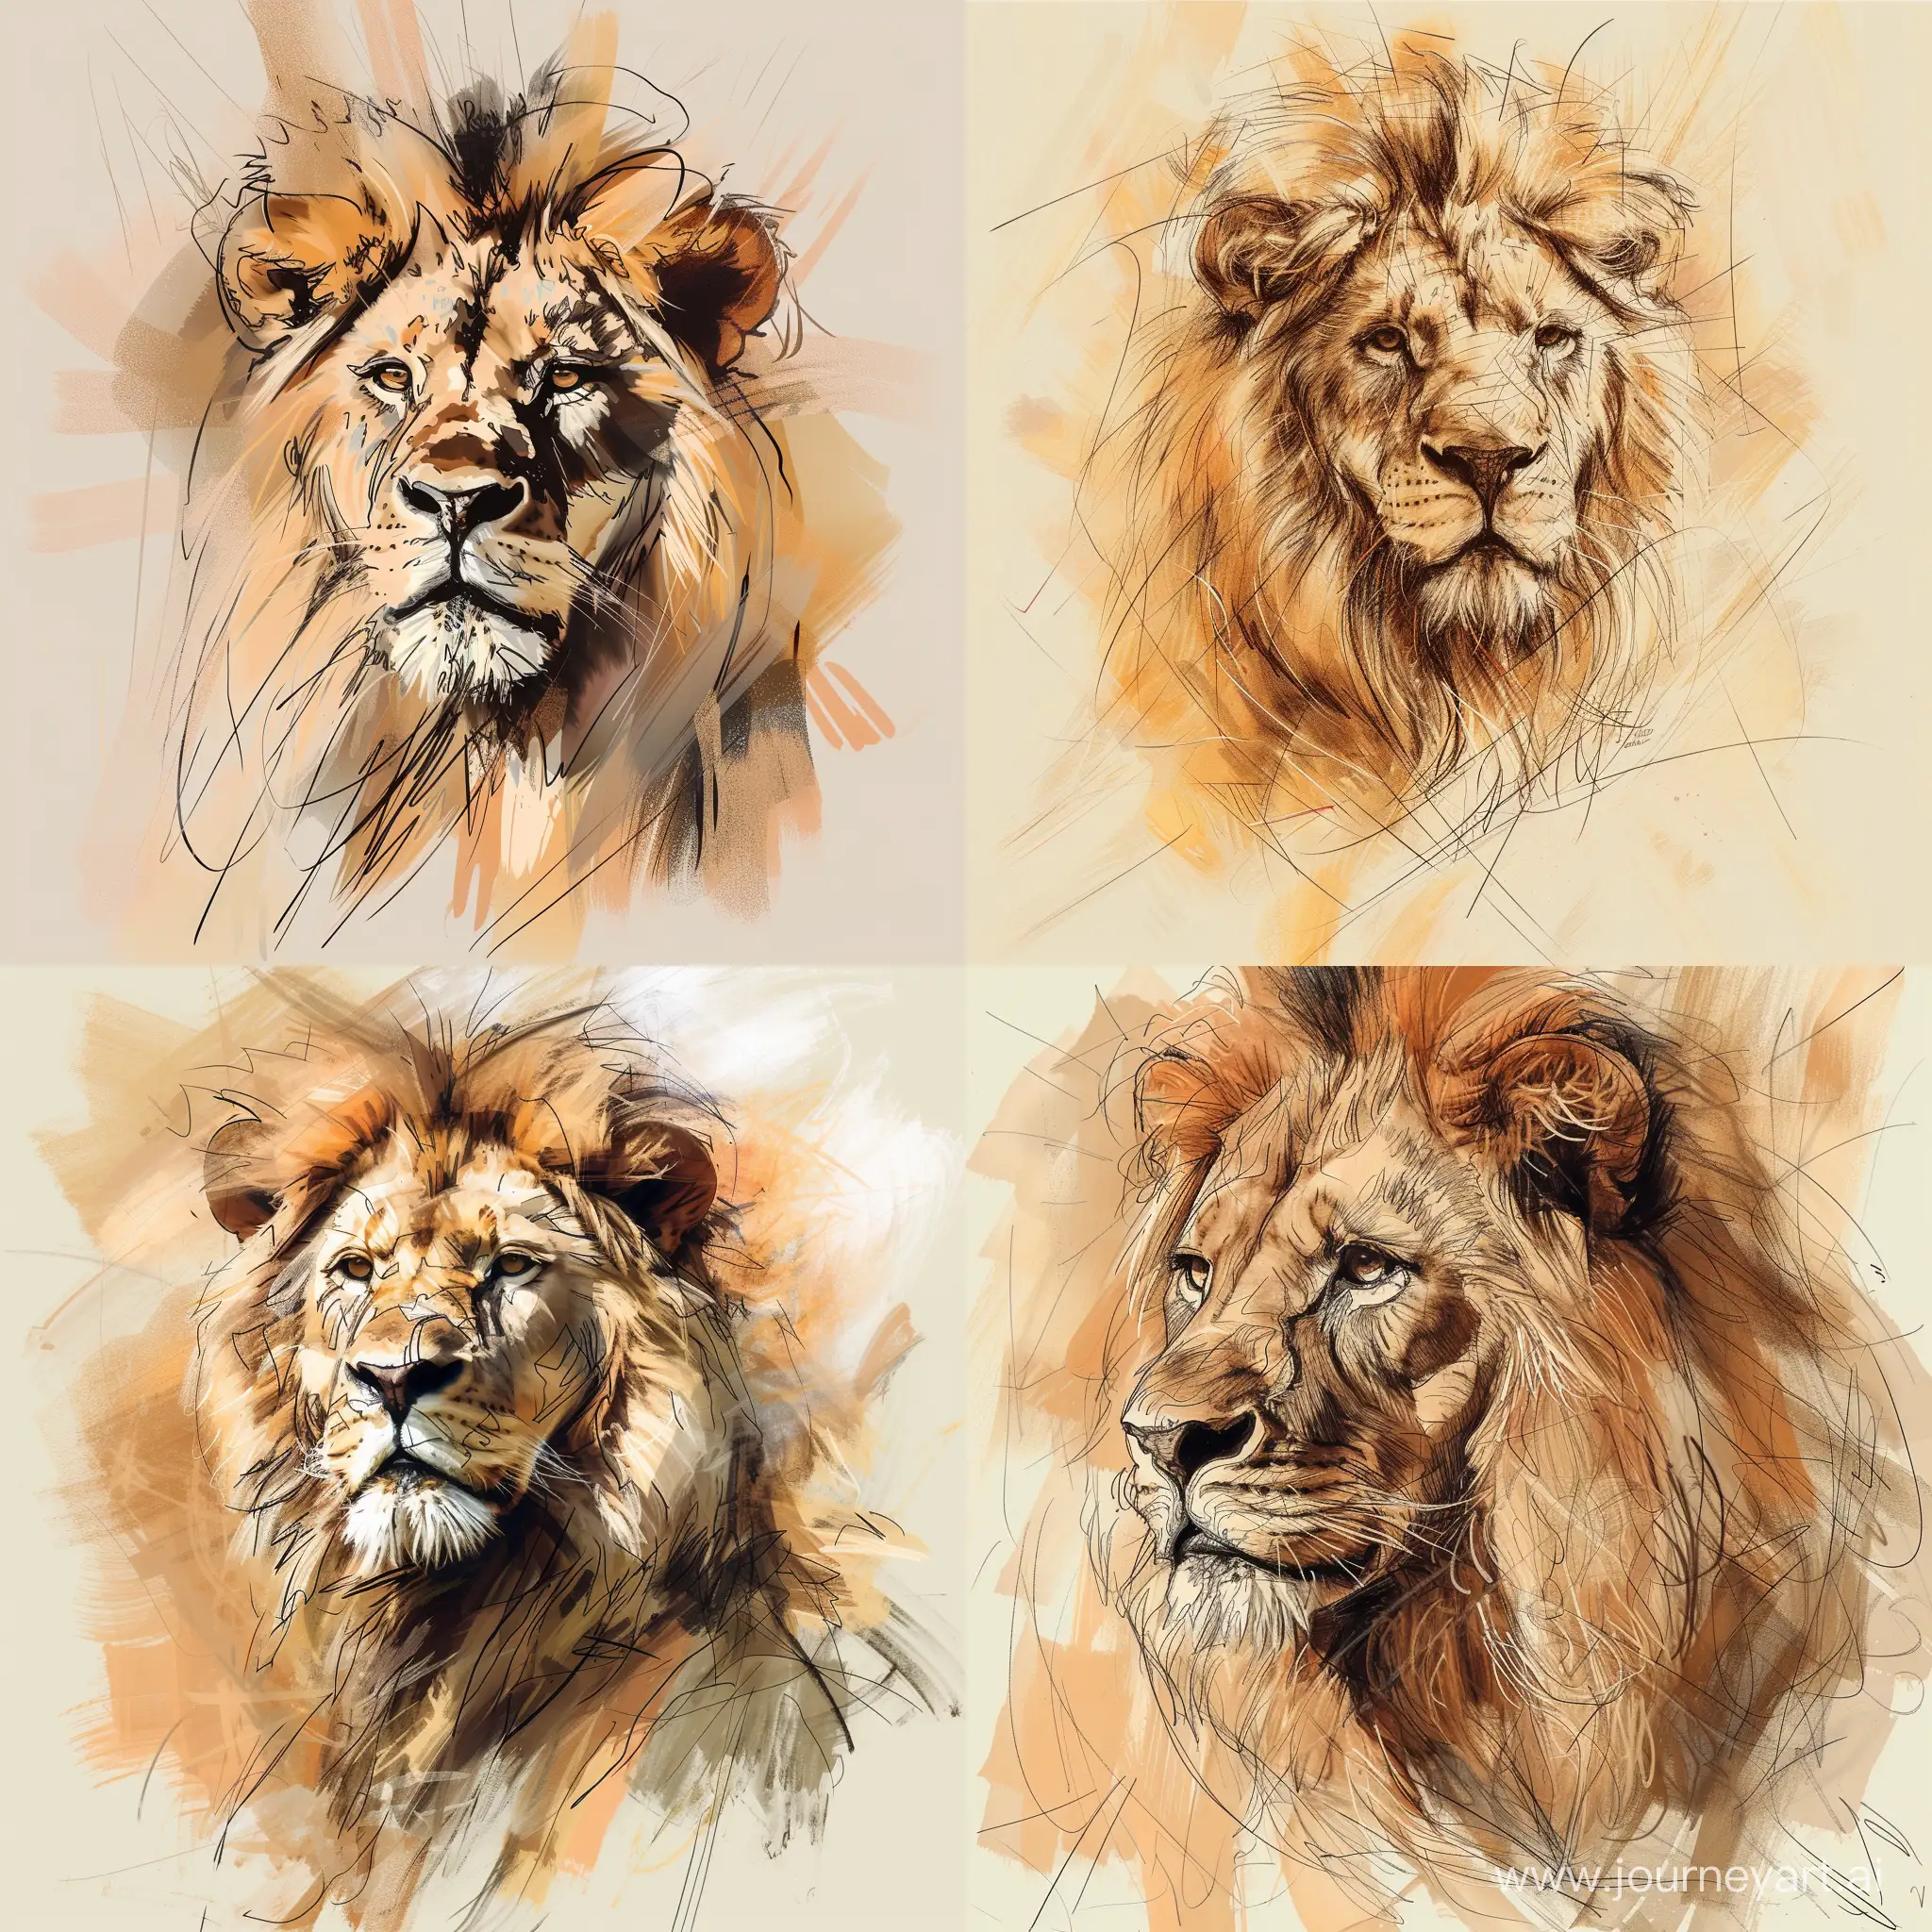 Expressive-Sketch-Portrait-of-a-Lion-in-Warm-Colors